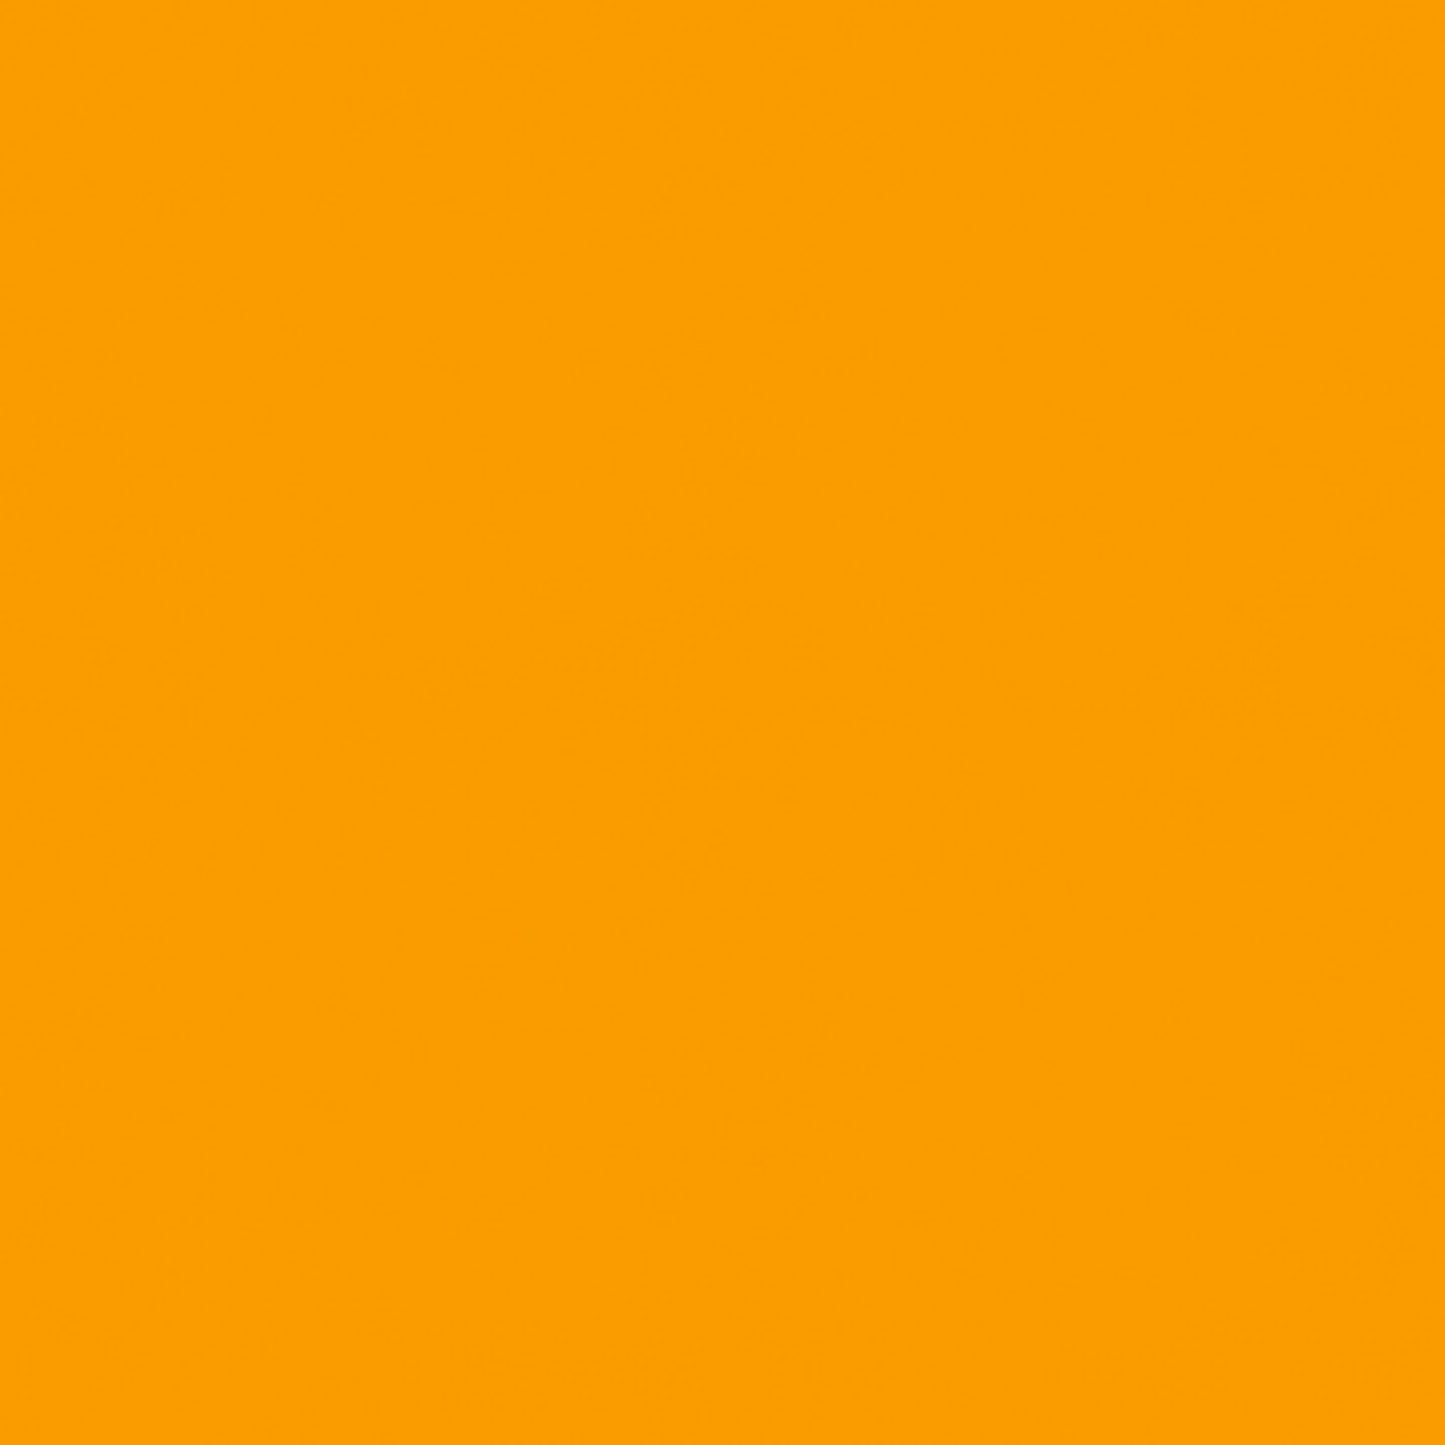 Creativ Company Plus Color Acrylverf, Yellow Sun, 60ml